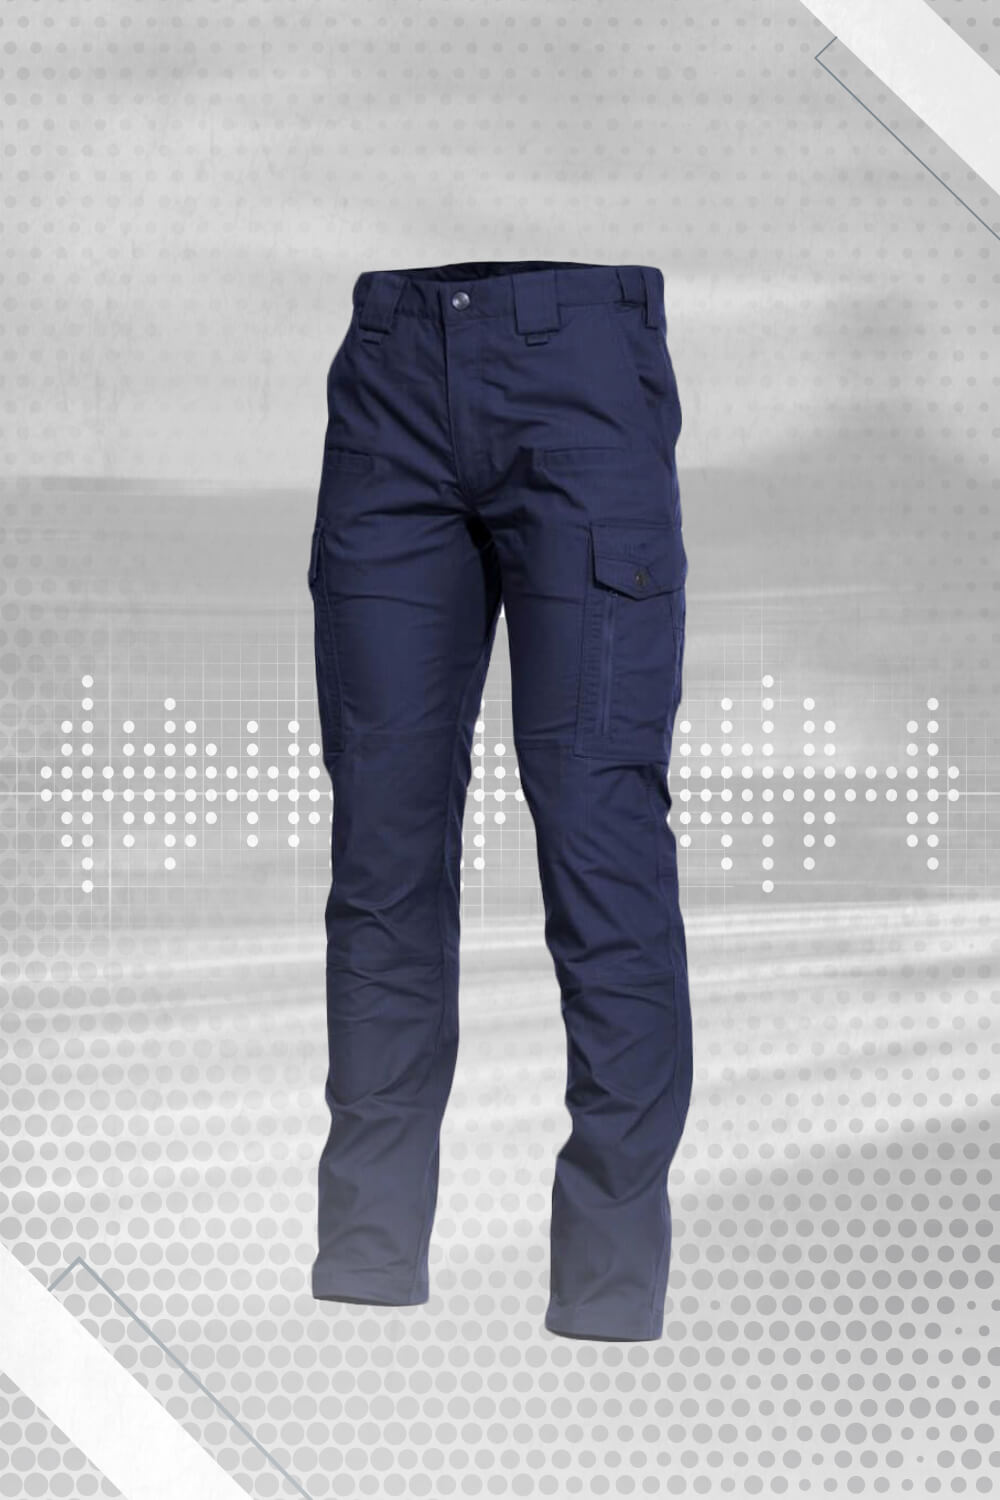 Pantalon Tactique DEFCON 5 Gladio avec genouillères intégrées.